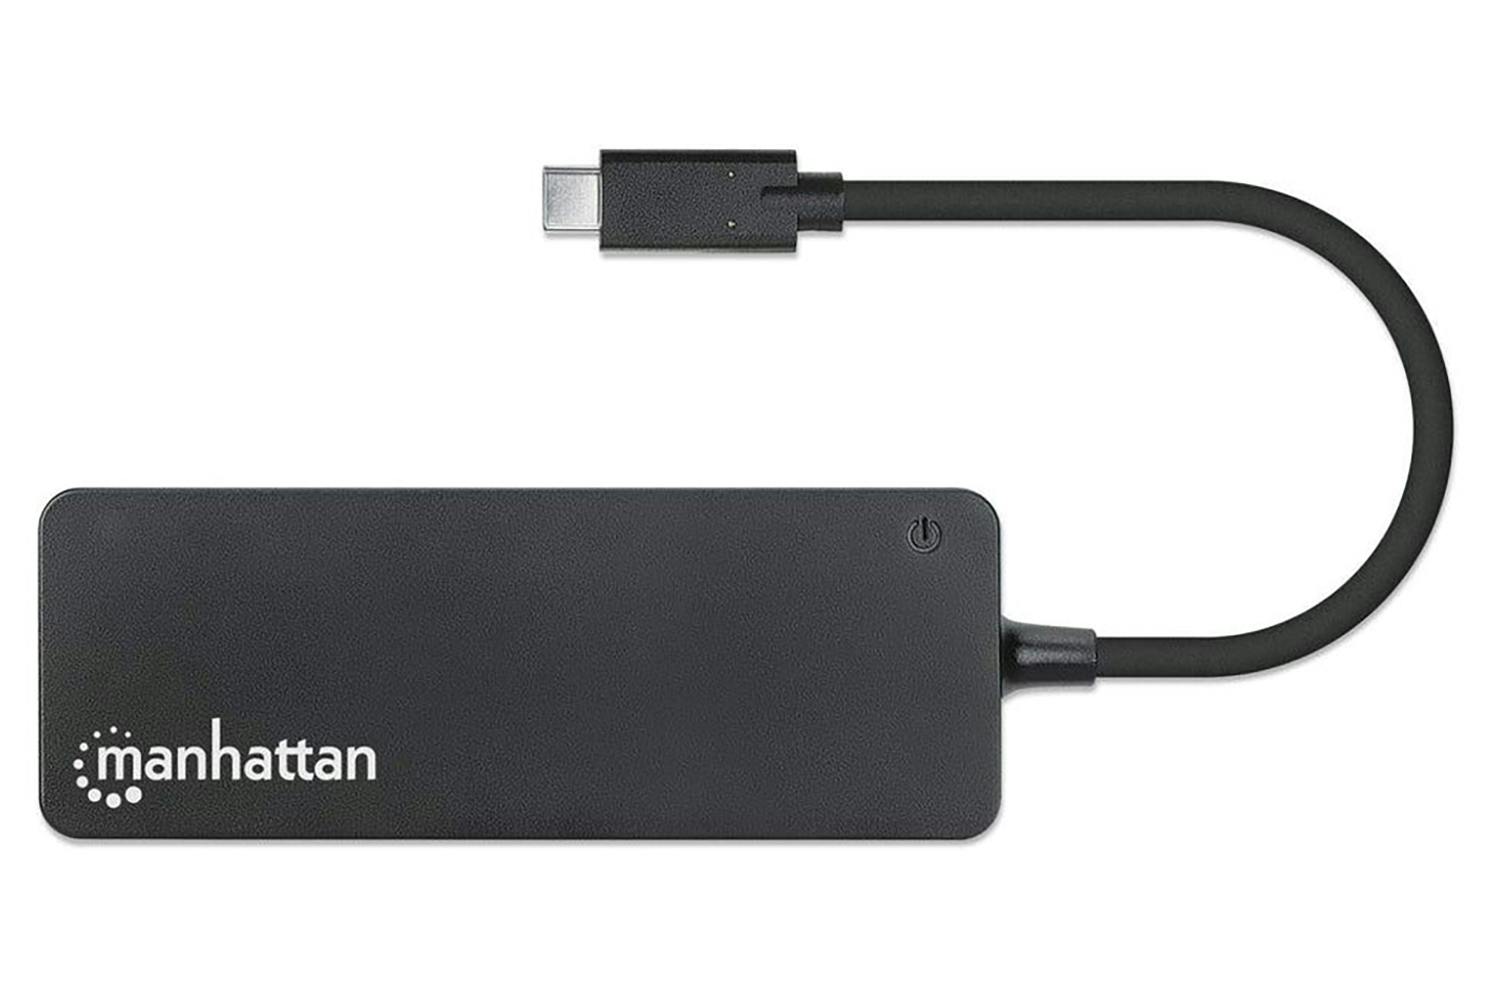 Manhattan 4 Port USB 3.0 & 3.2 Gen 1 Splitter Hub with Long 5ft Cable